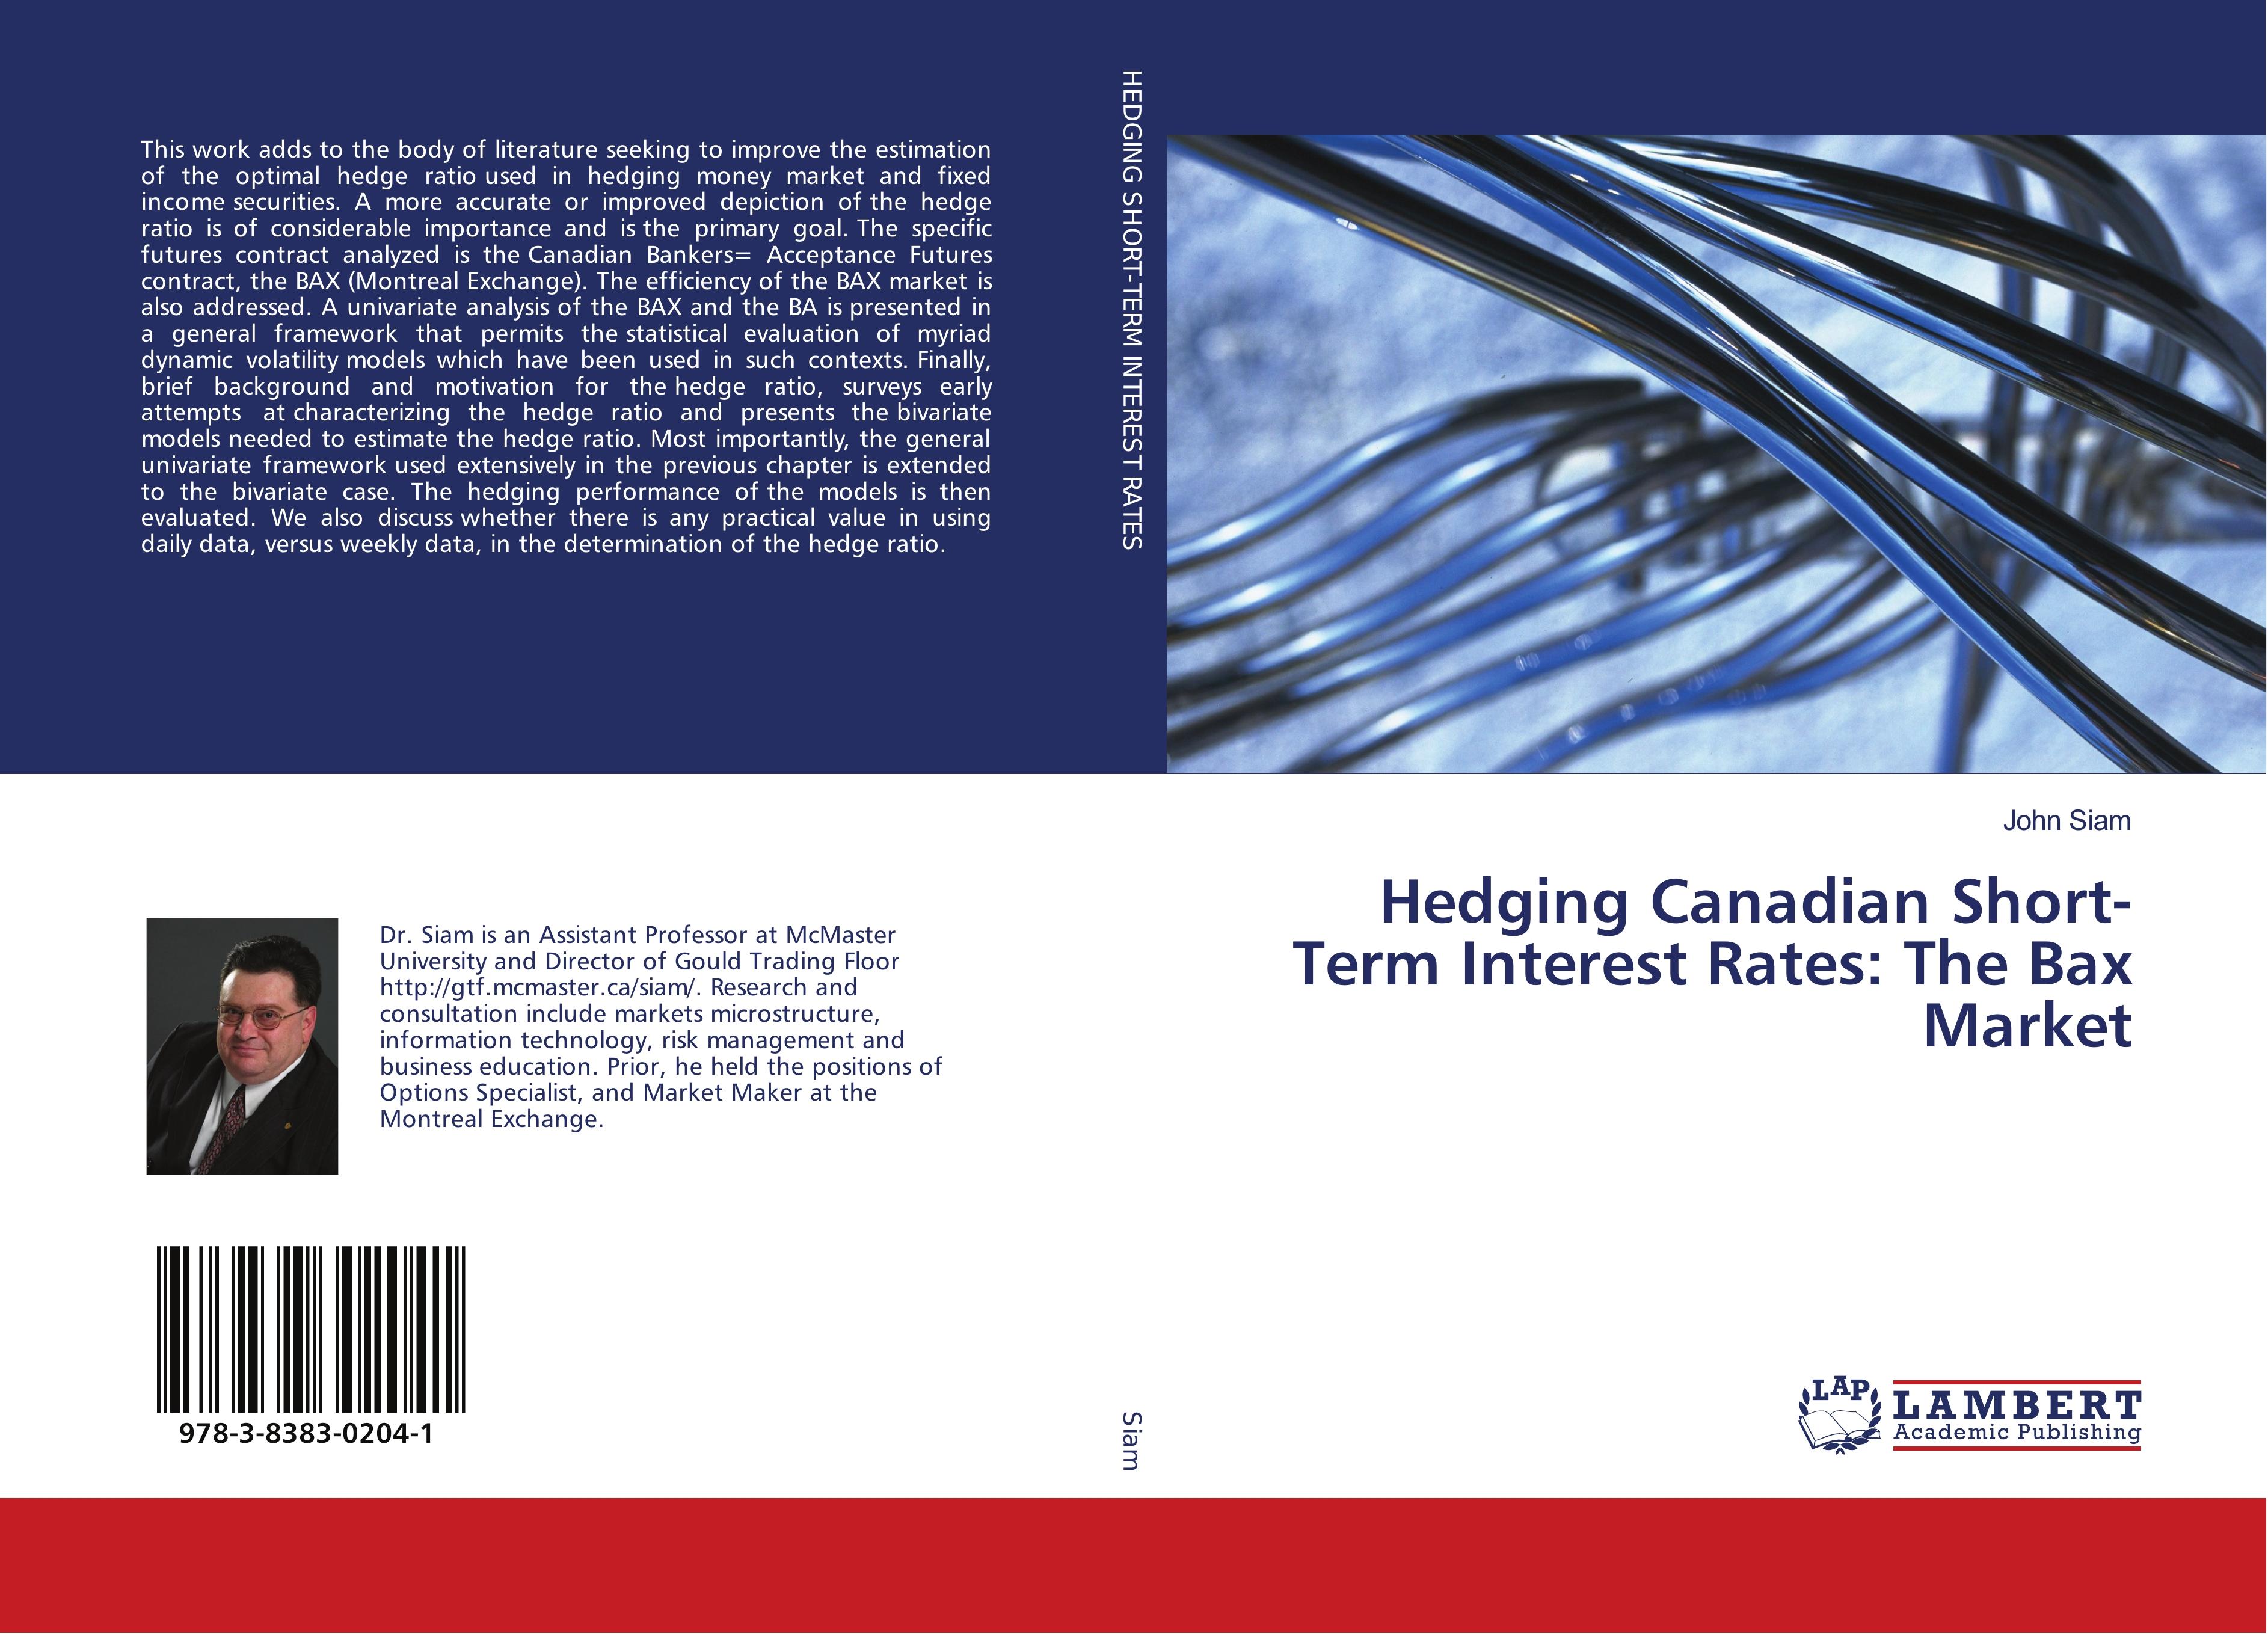 Hedging Canadian Short-Term Interest Rates: The Bax Market - Siam, John